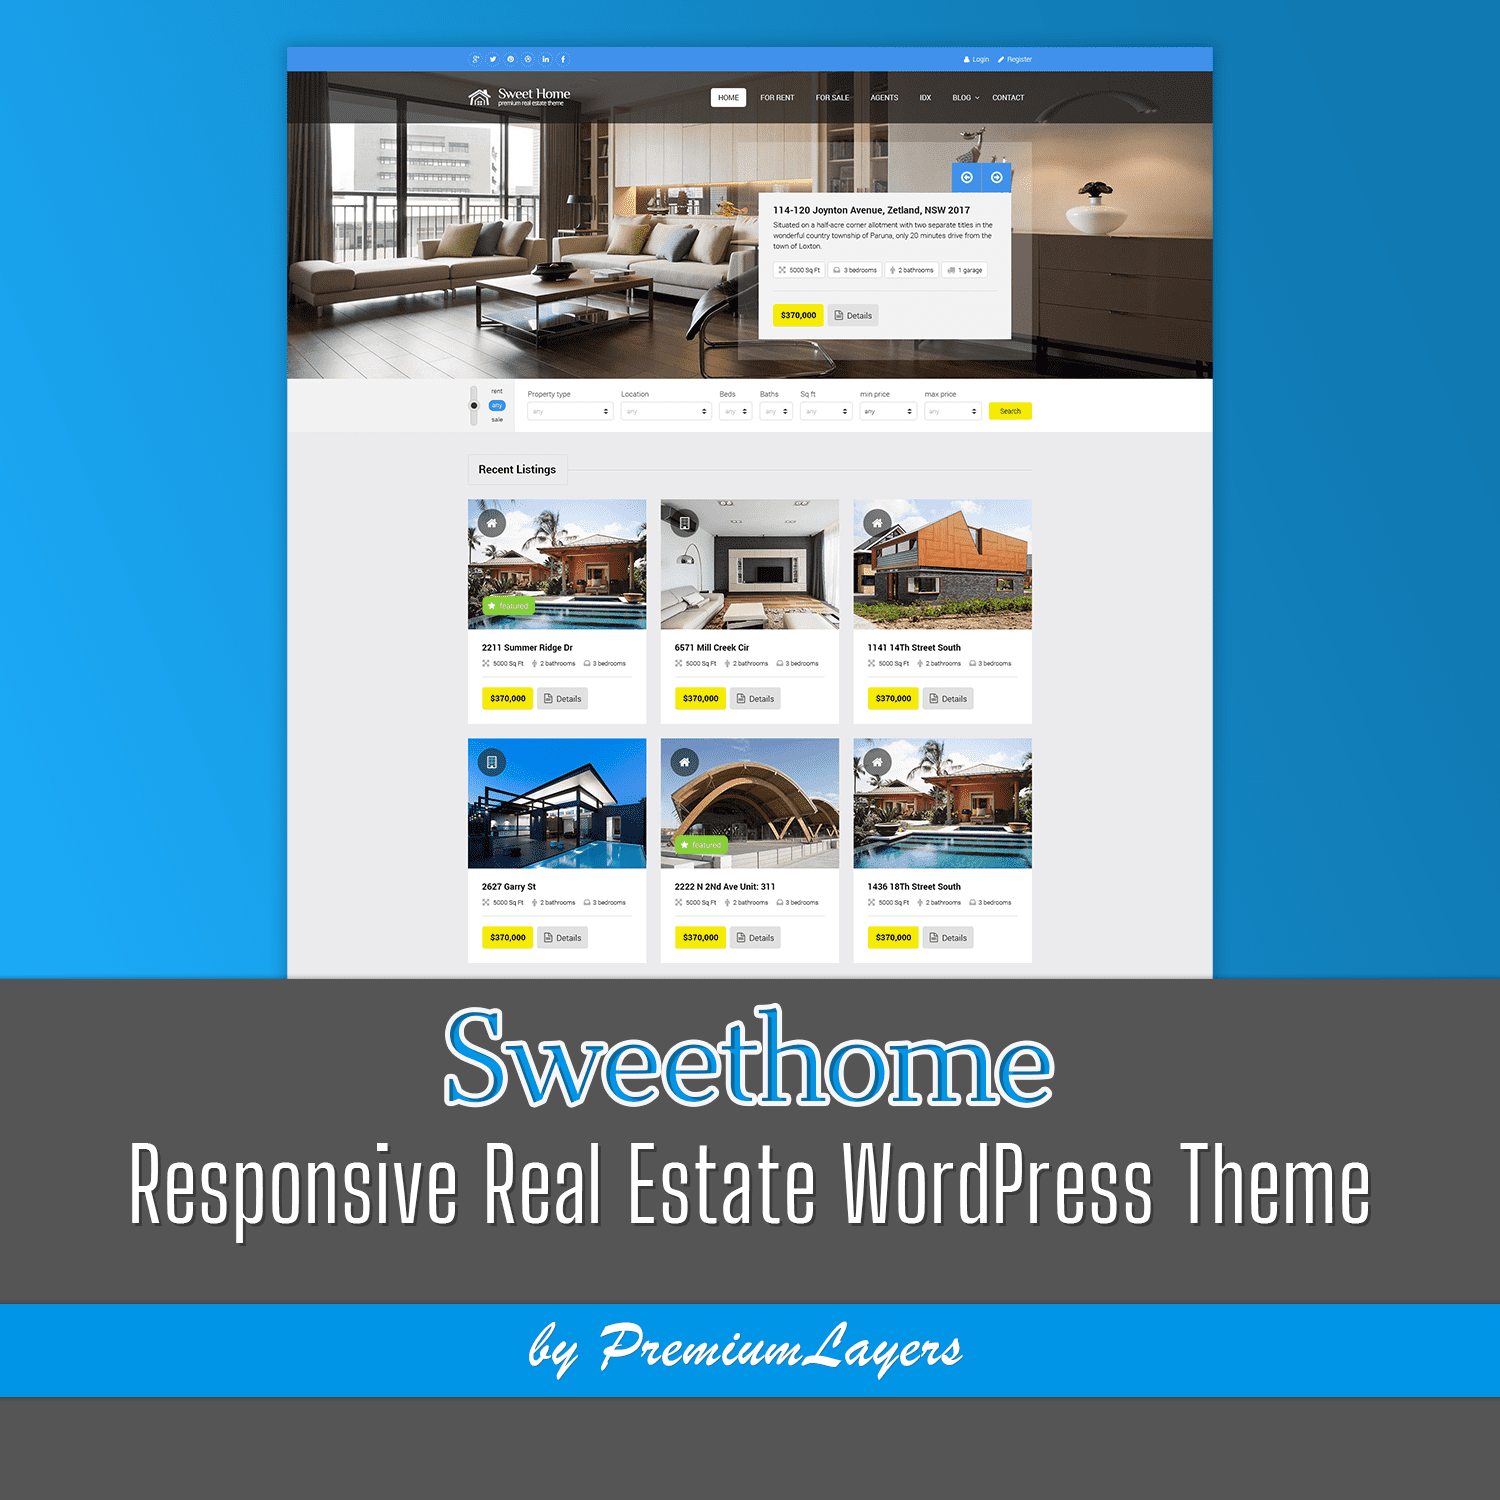 Sweethome - Responsive Real Estate WordPress Theme Cover.